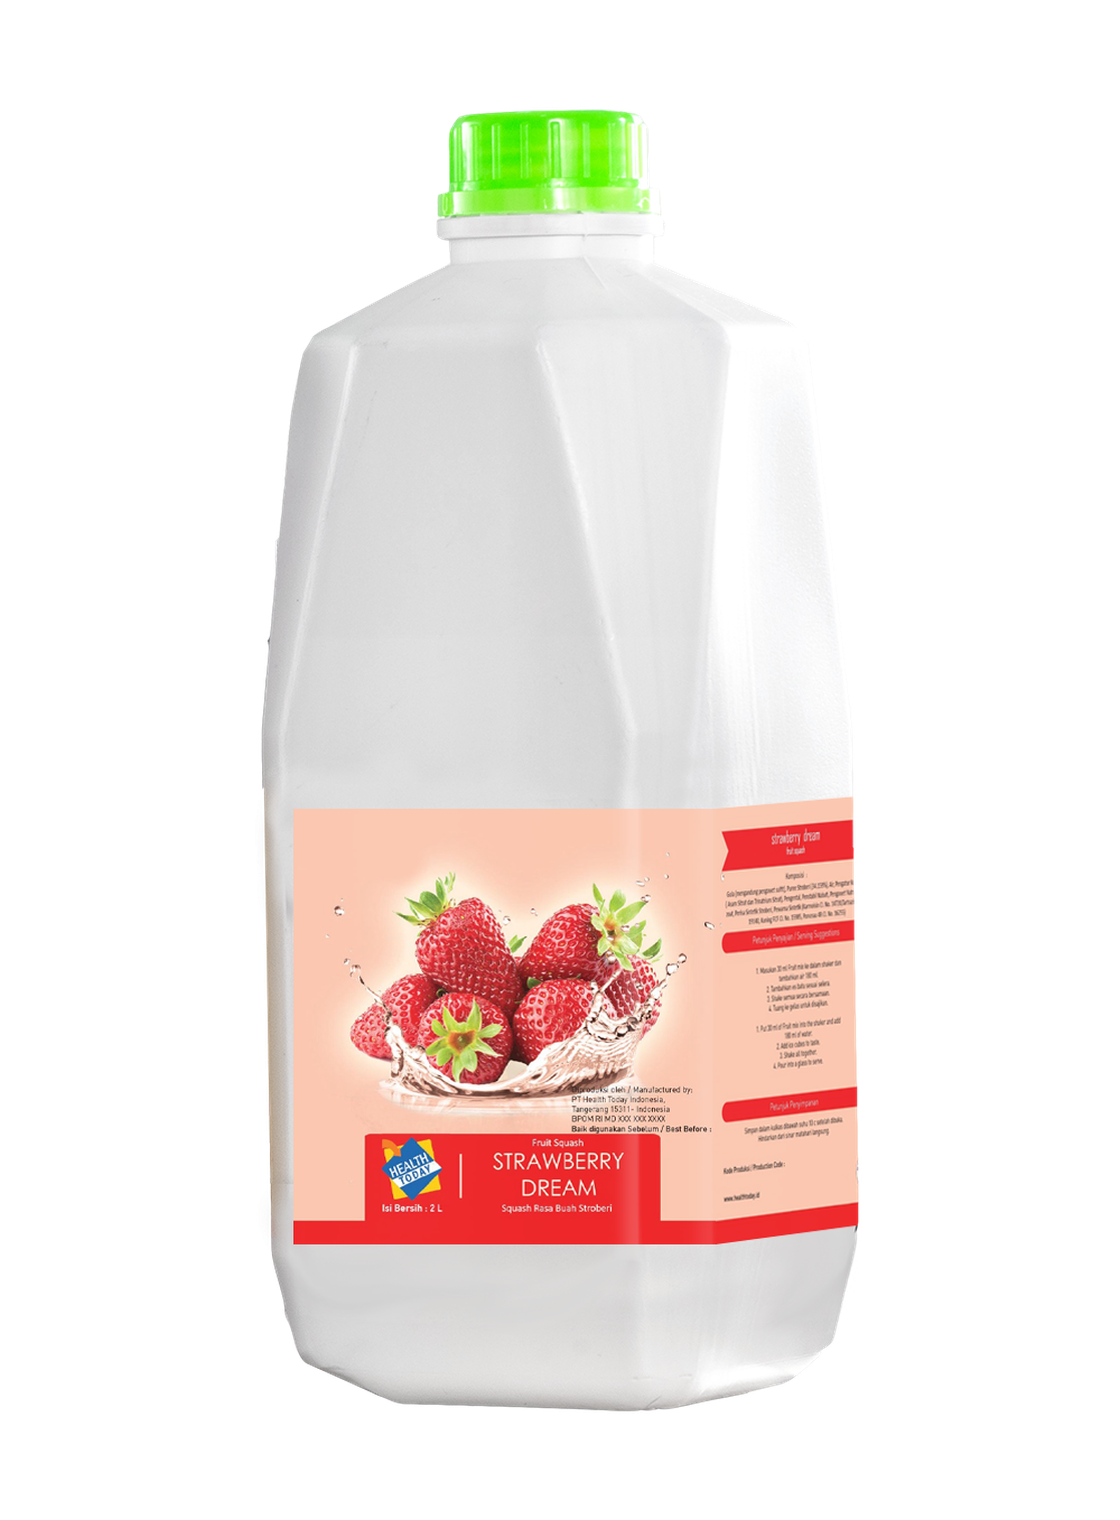 20 ml Health Today Strawberry Dream Fruit Mix